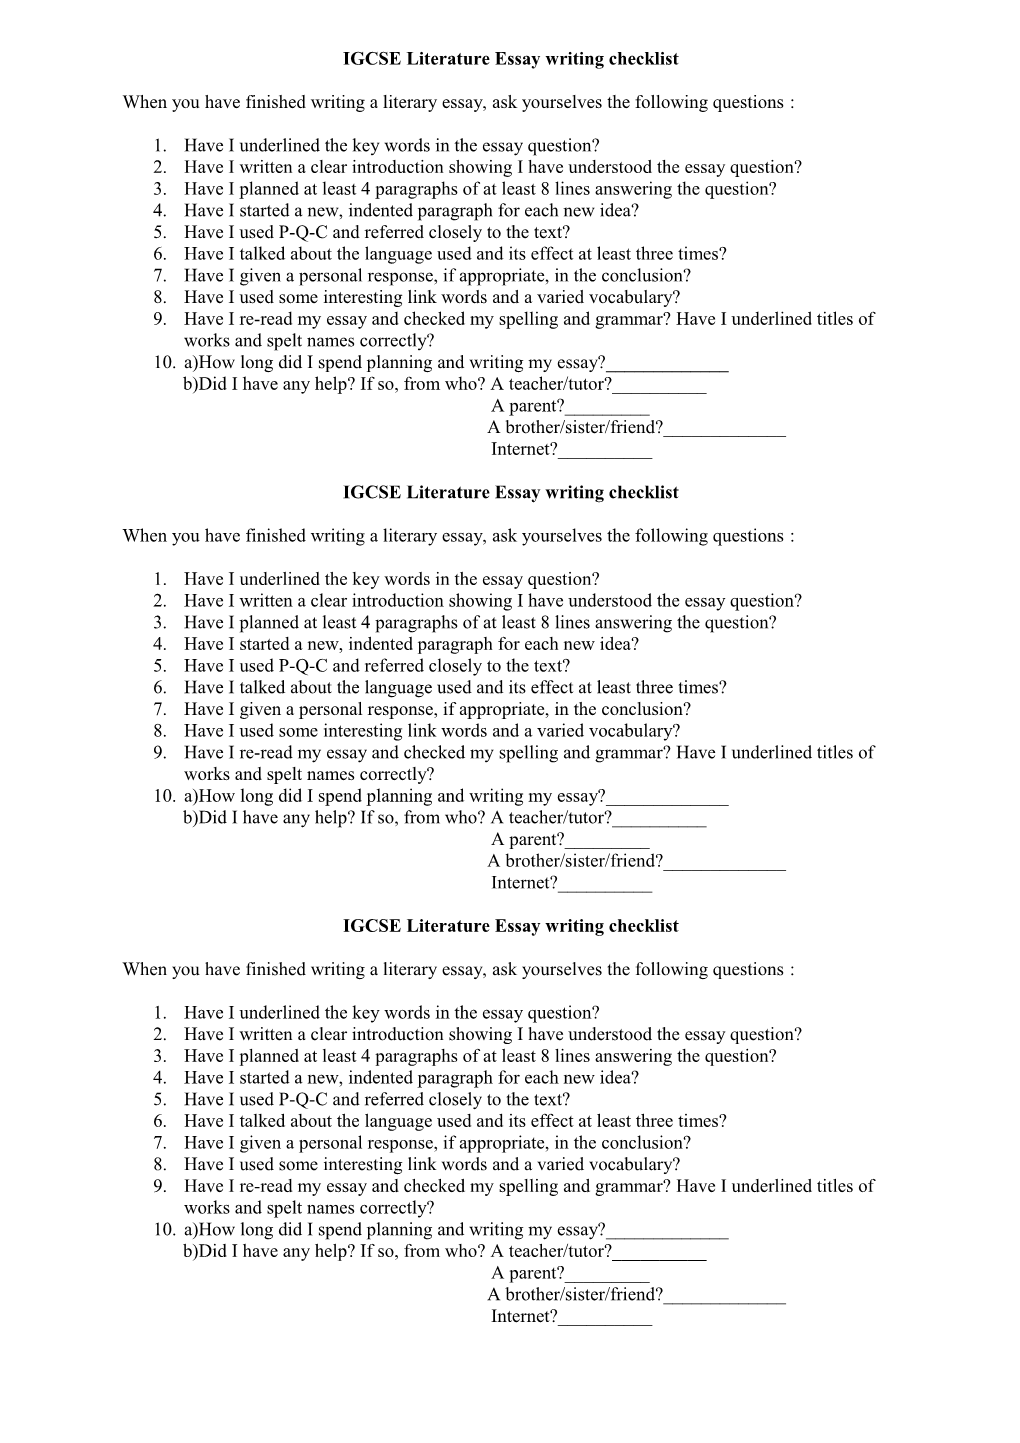 IGCSE Literature Essay Writing Checklist